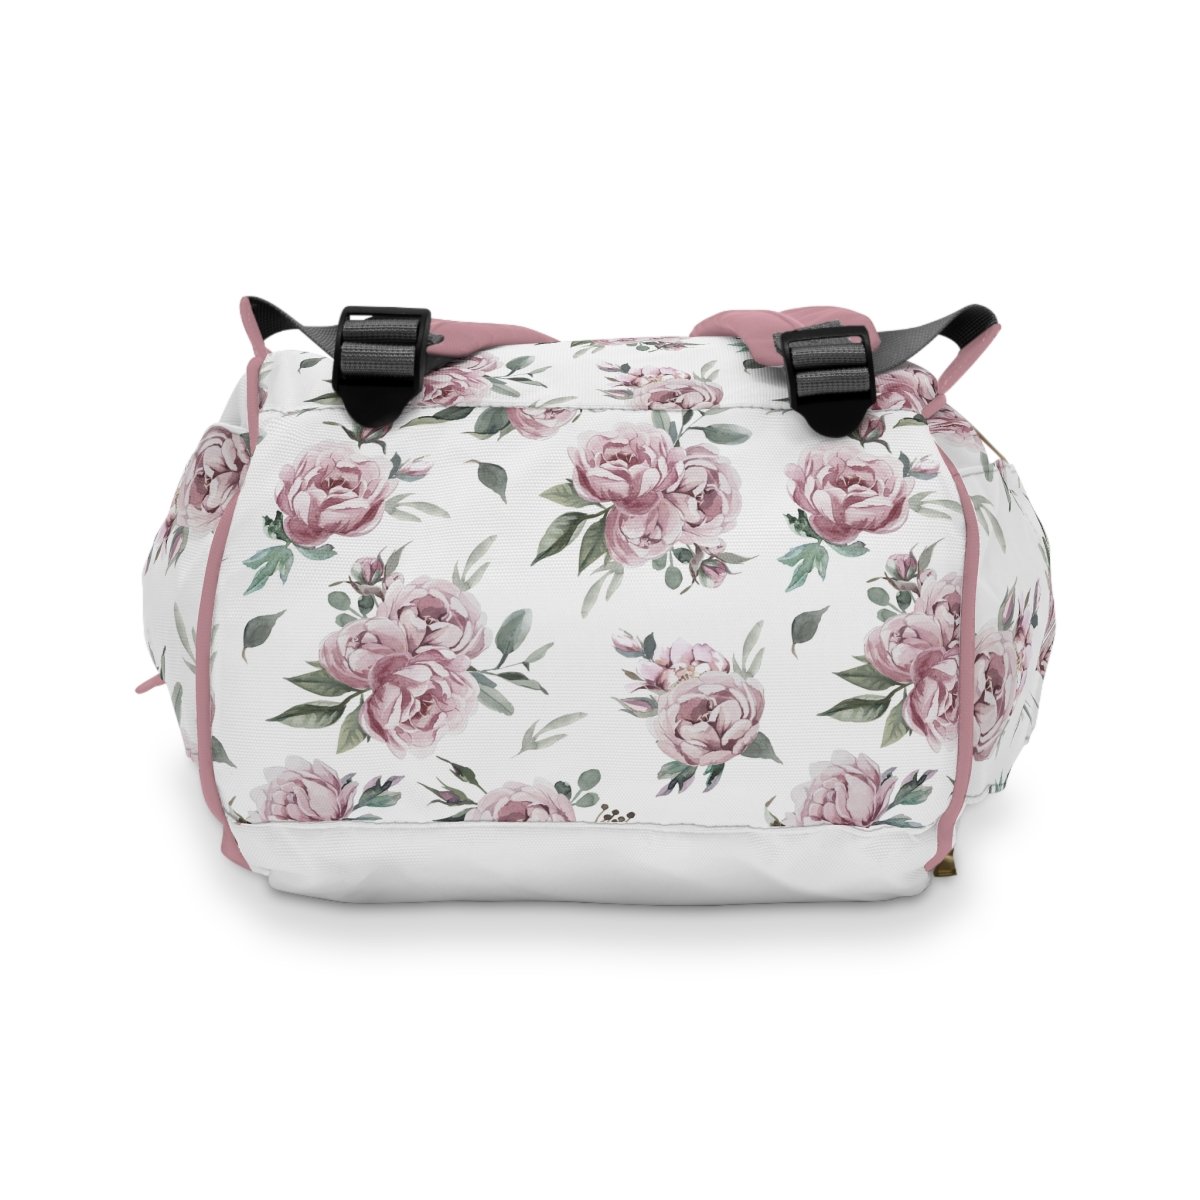 Floral Elephant Personalized Backpack Diaper Bag - Floral Elephant, gender_girl, text